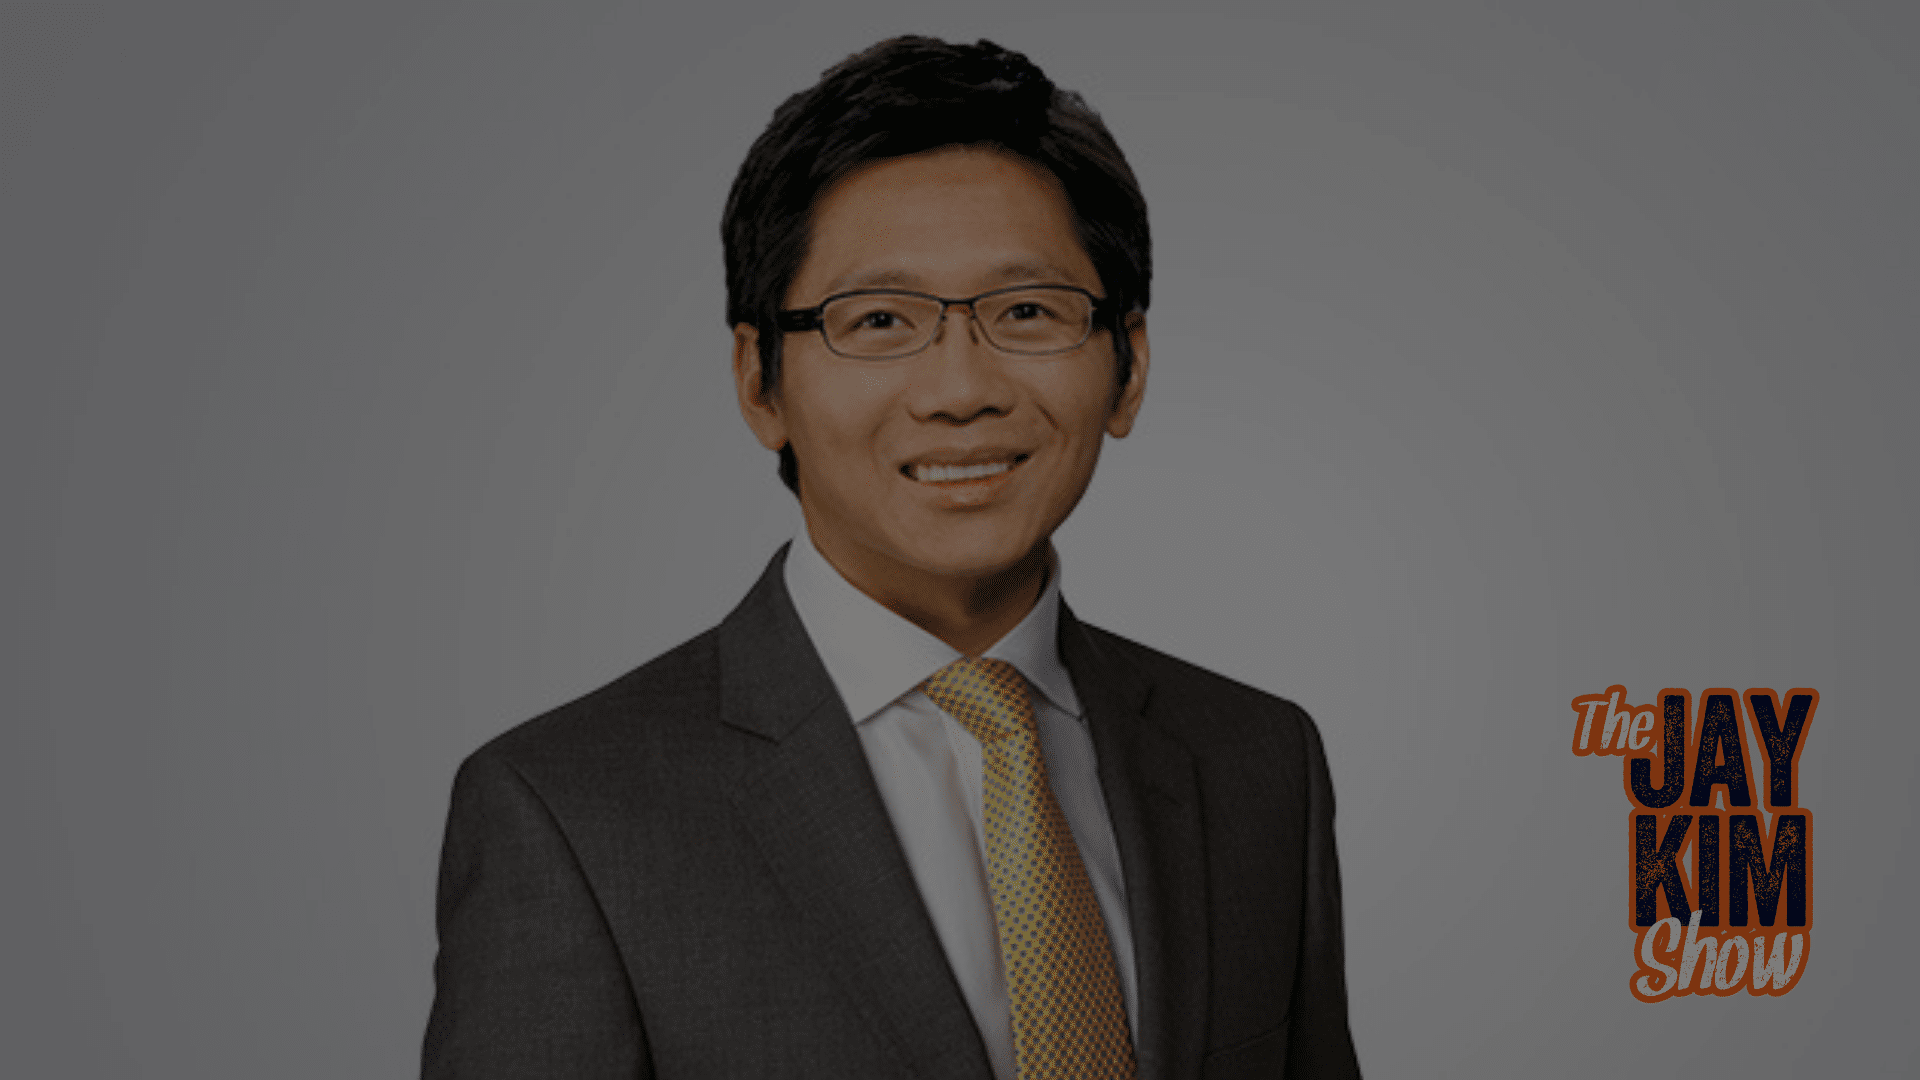 Jason Hsu, Founder & CIO of Rayliant Global Advisors